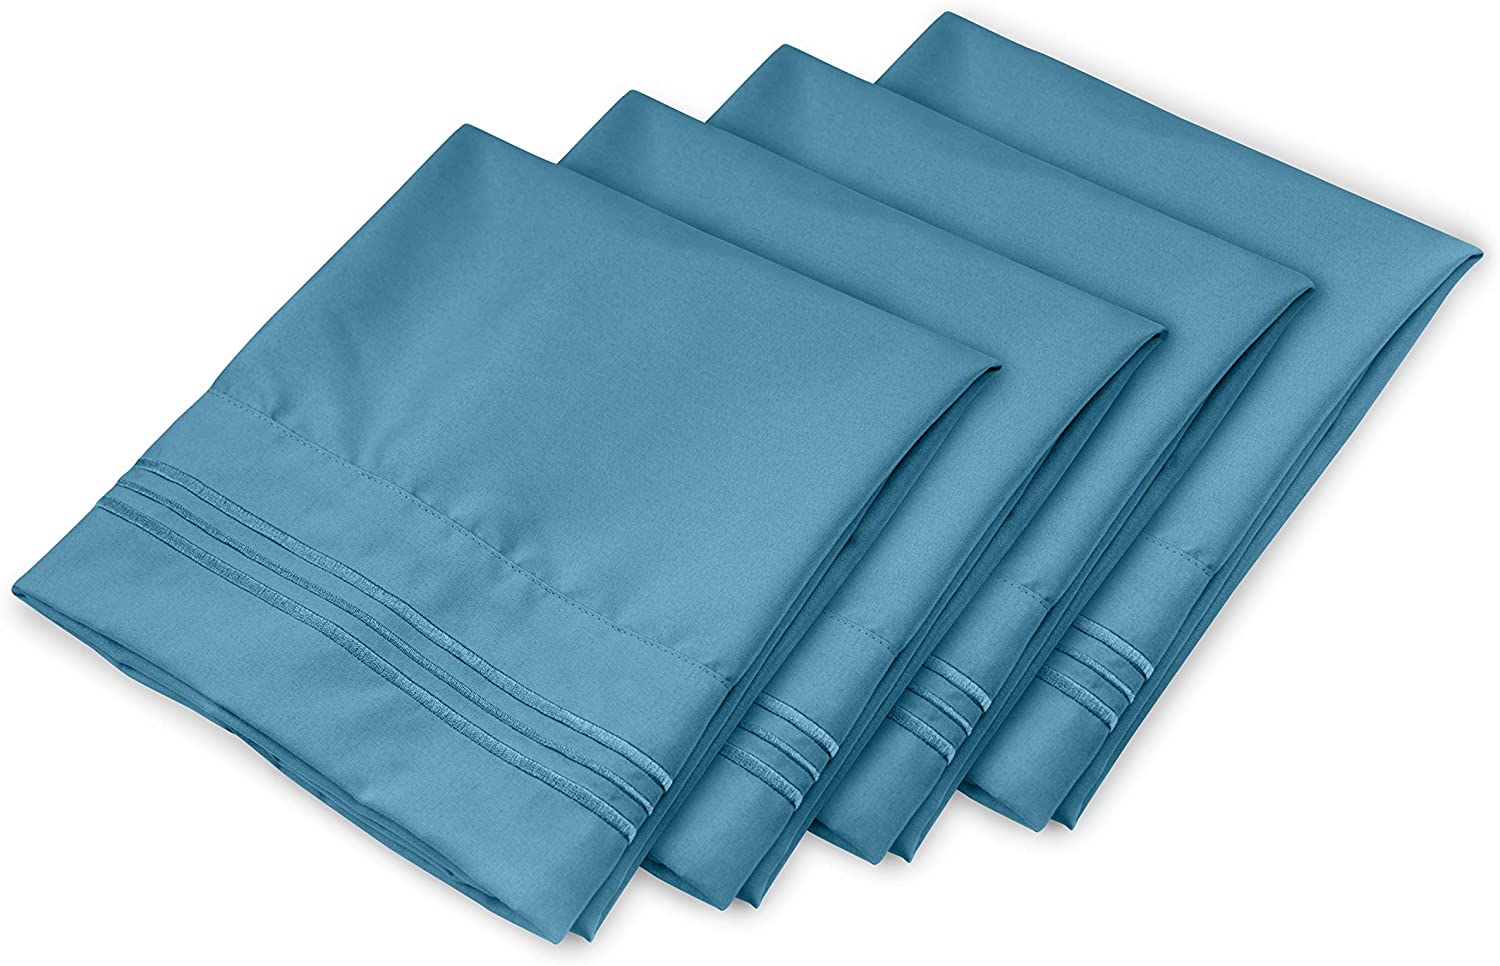 4 Pillowcase Set - Denim Blue